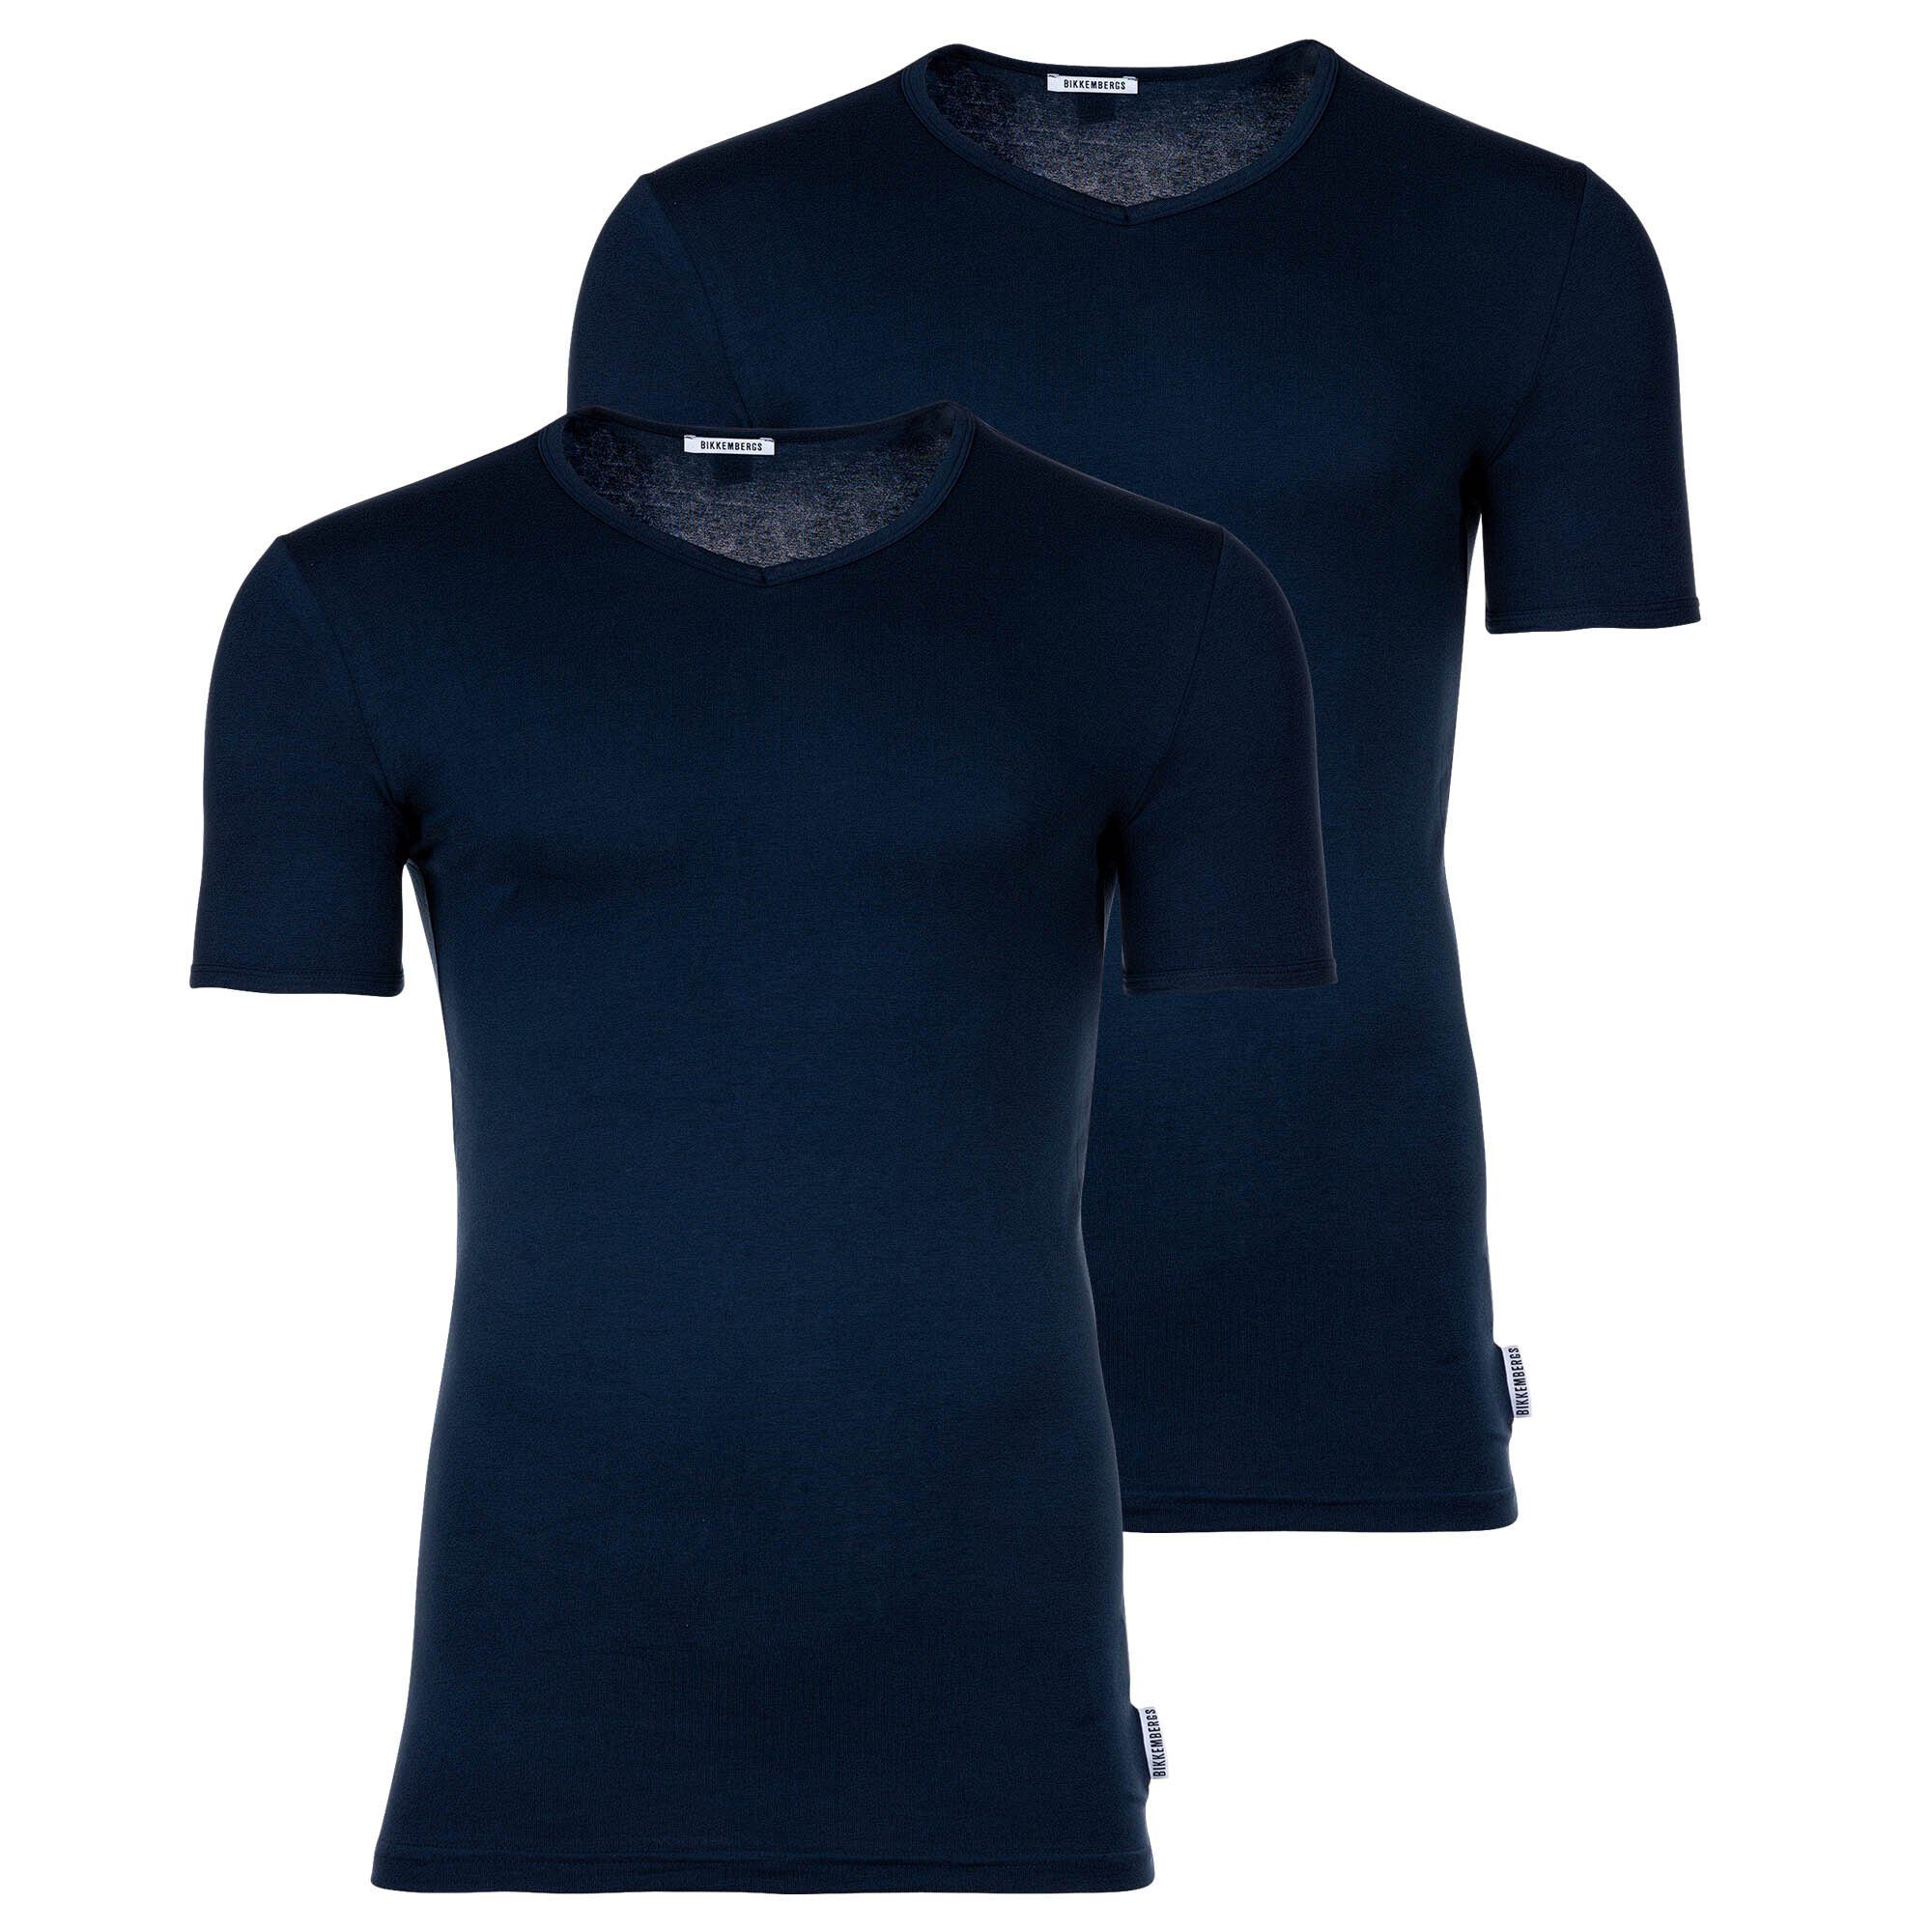 Pack 2er BI-PACK T-SHIRT Marine Bikkembergs T-Shirt, Herren T-Shirt -